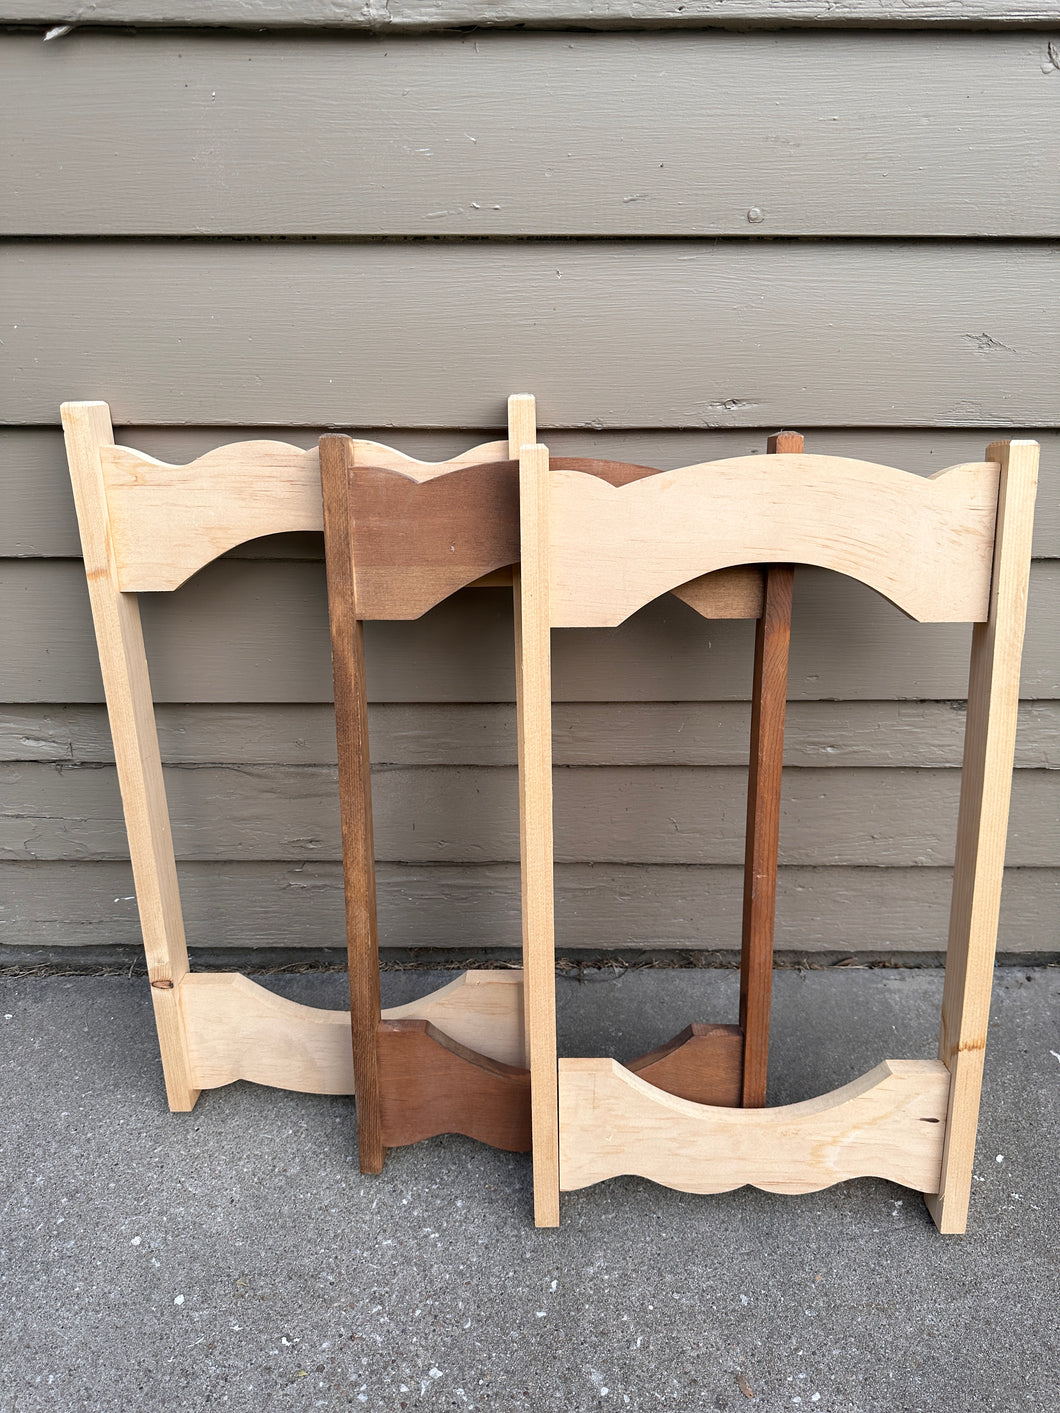 Wood Craft Frames